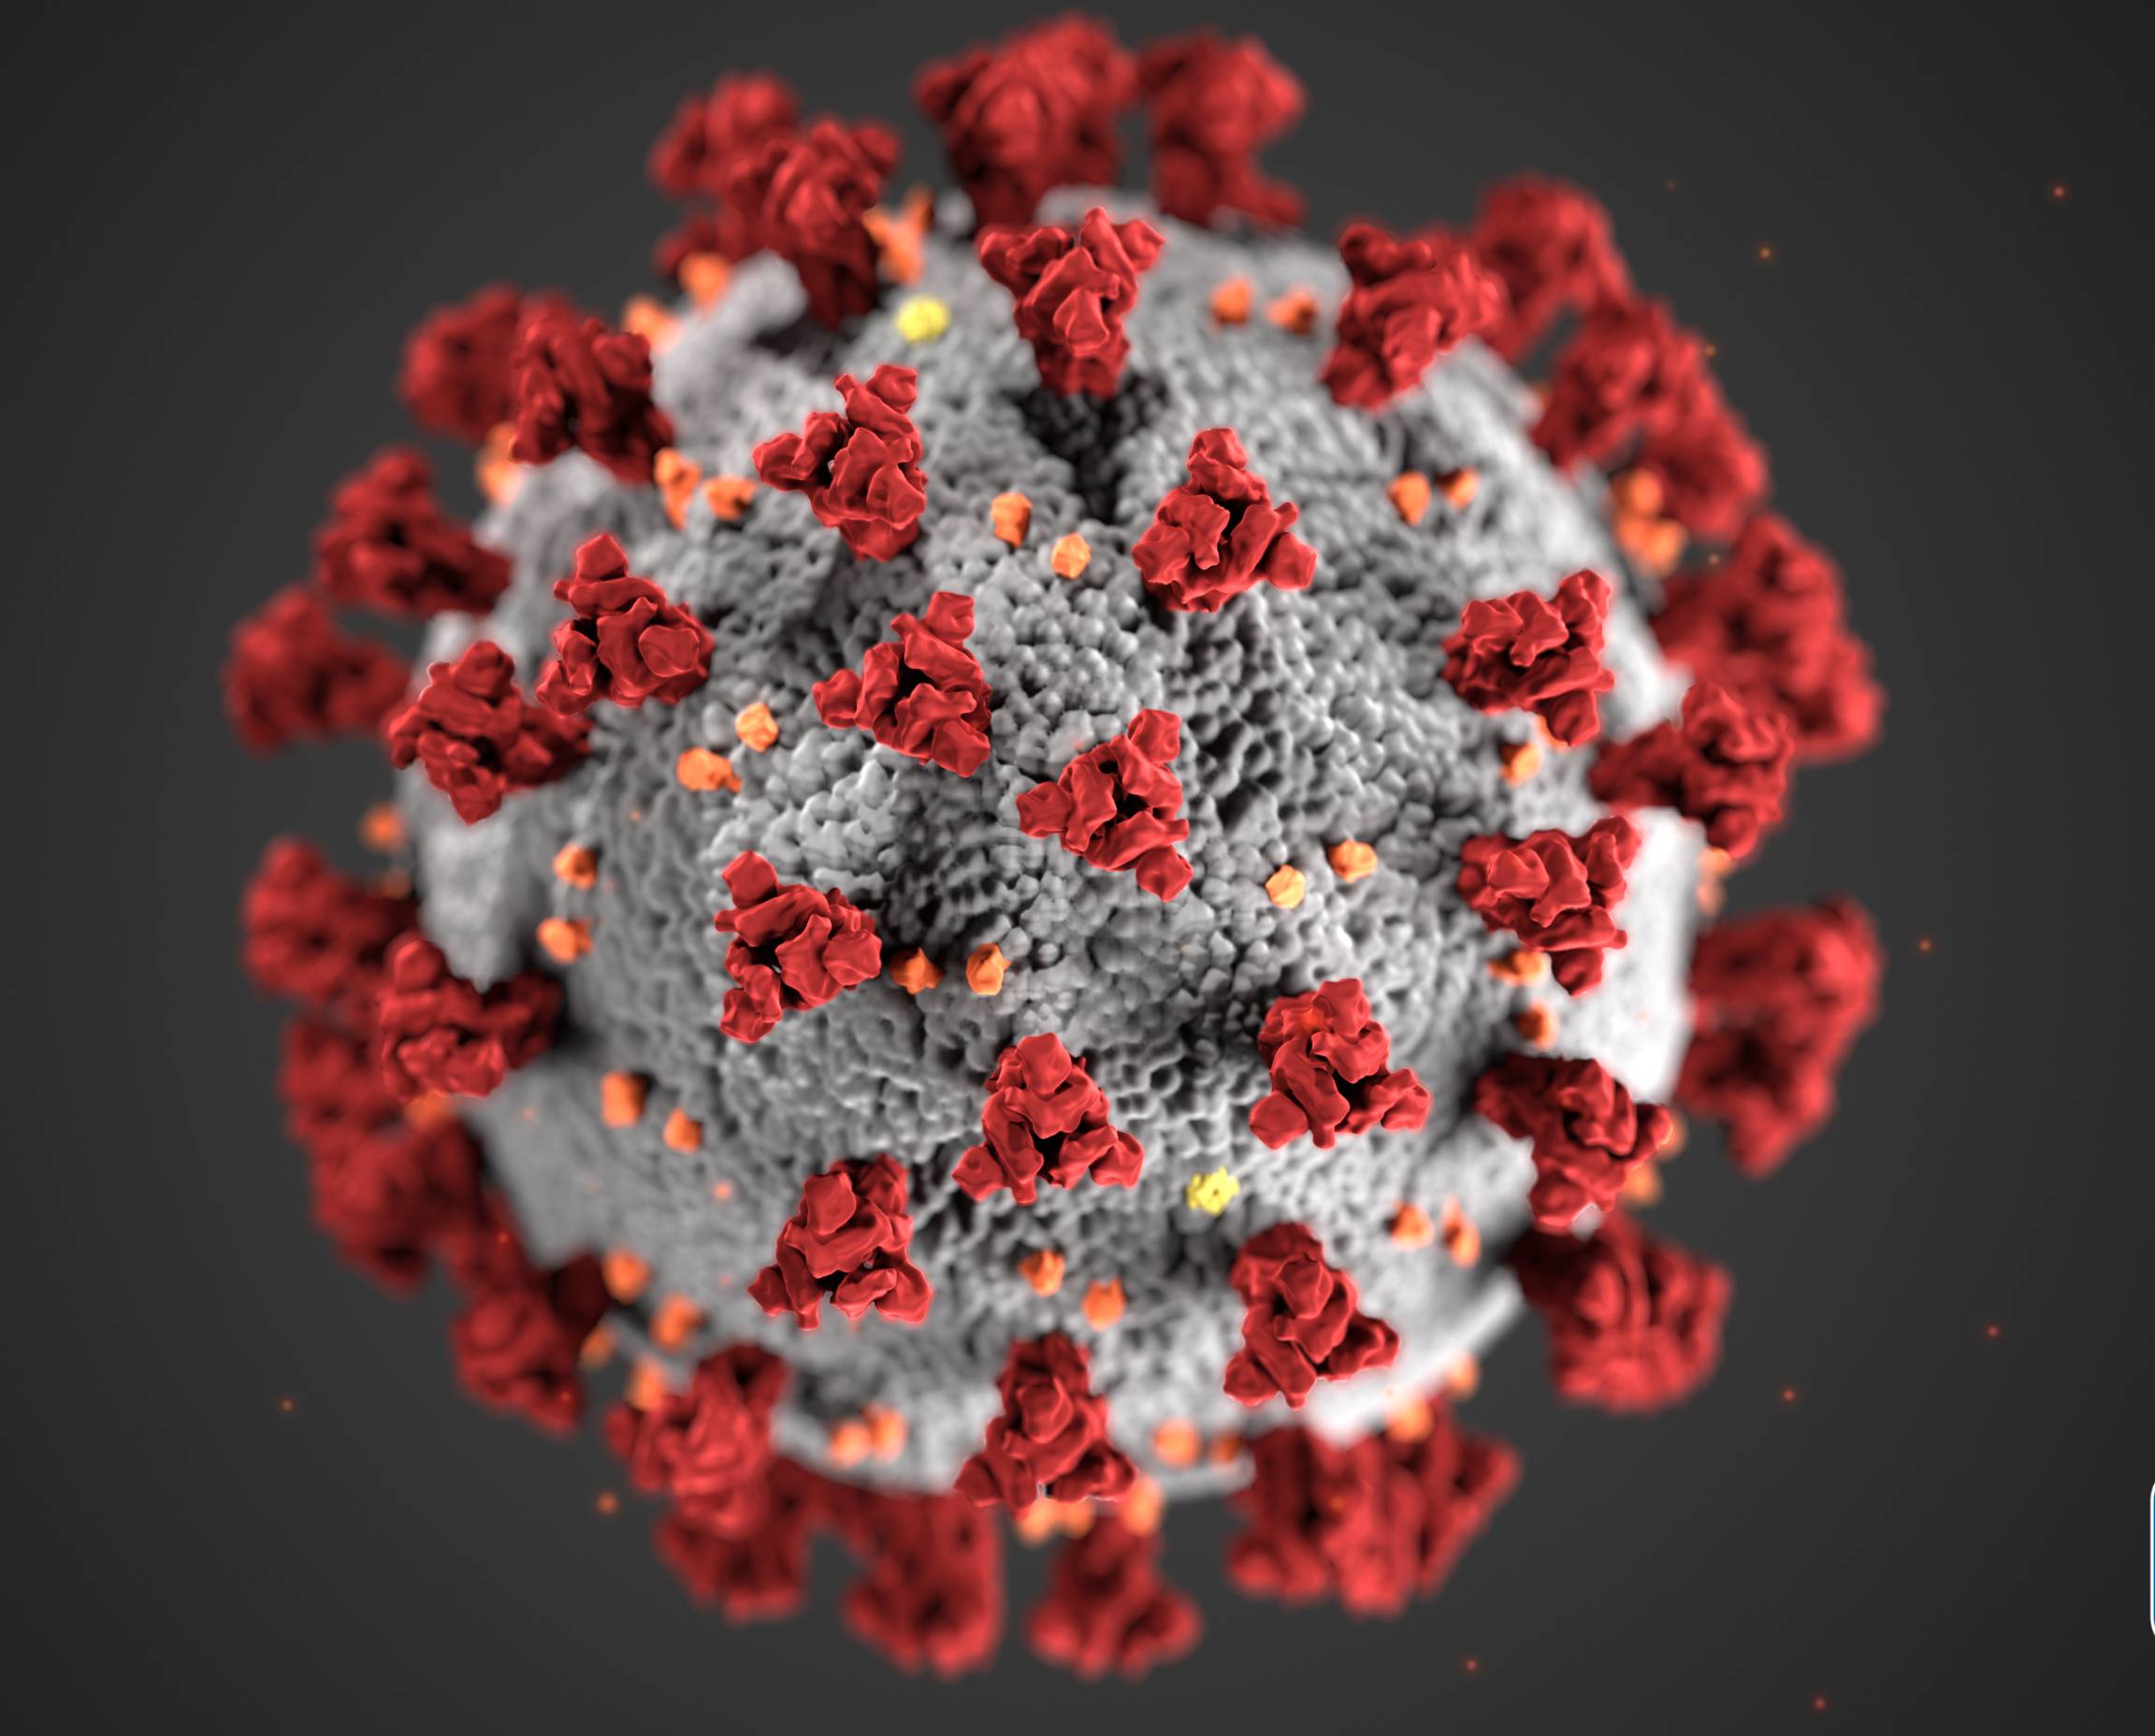 Covid 19: Novel Coronavirus Covid 19 Virus Under The Microscope